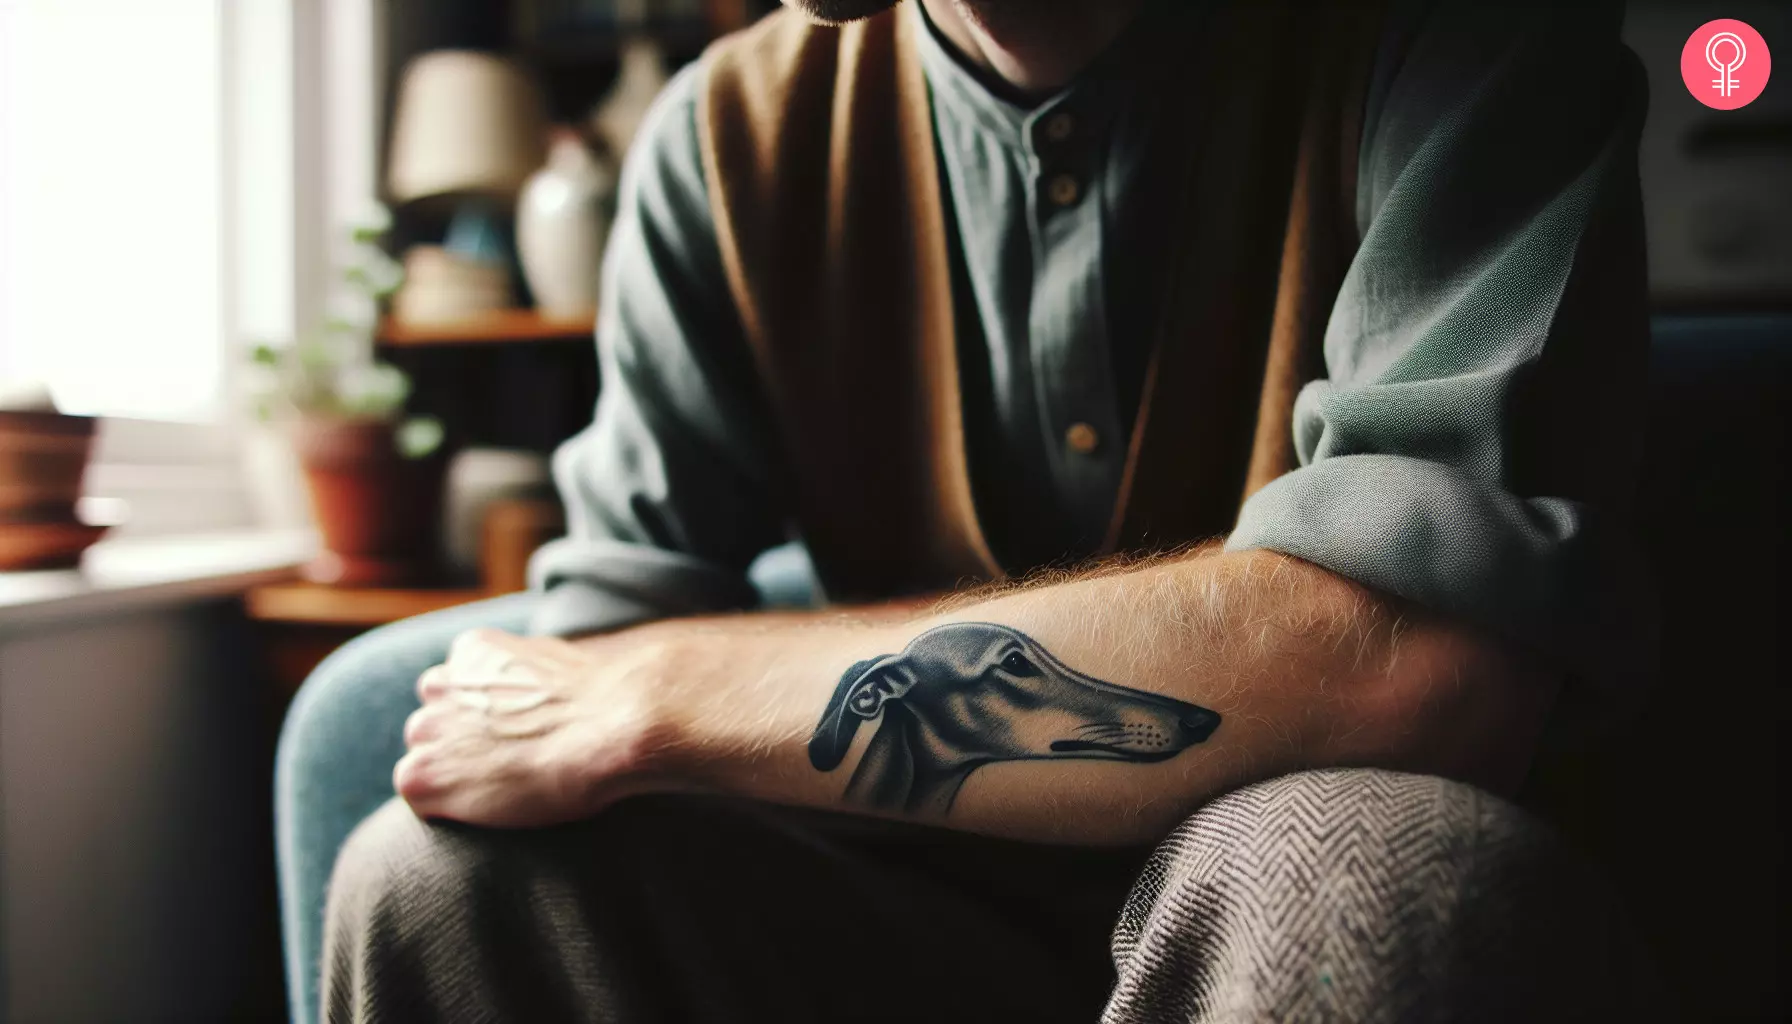 A minimalist greyhound tattoo on the lower arm of a man